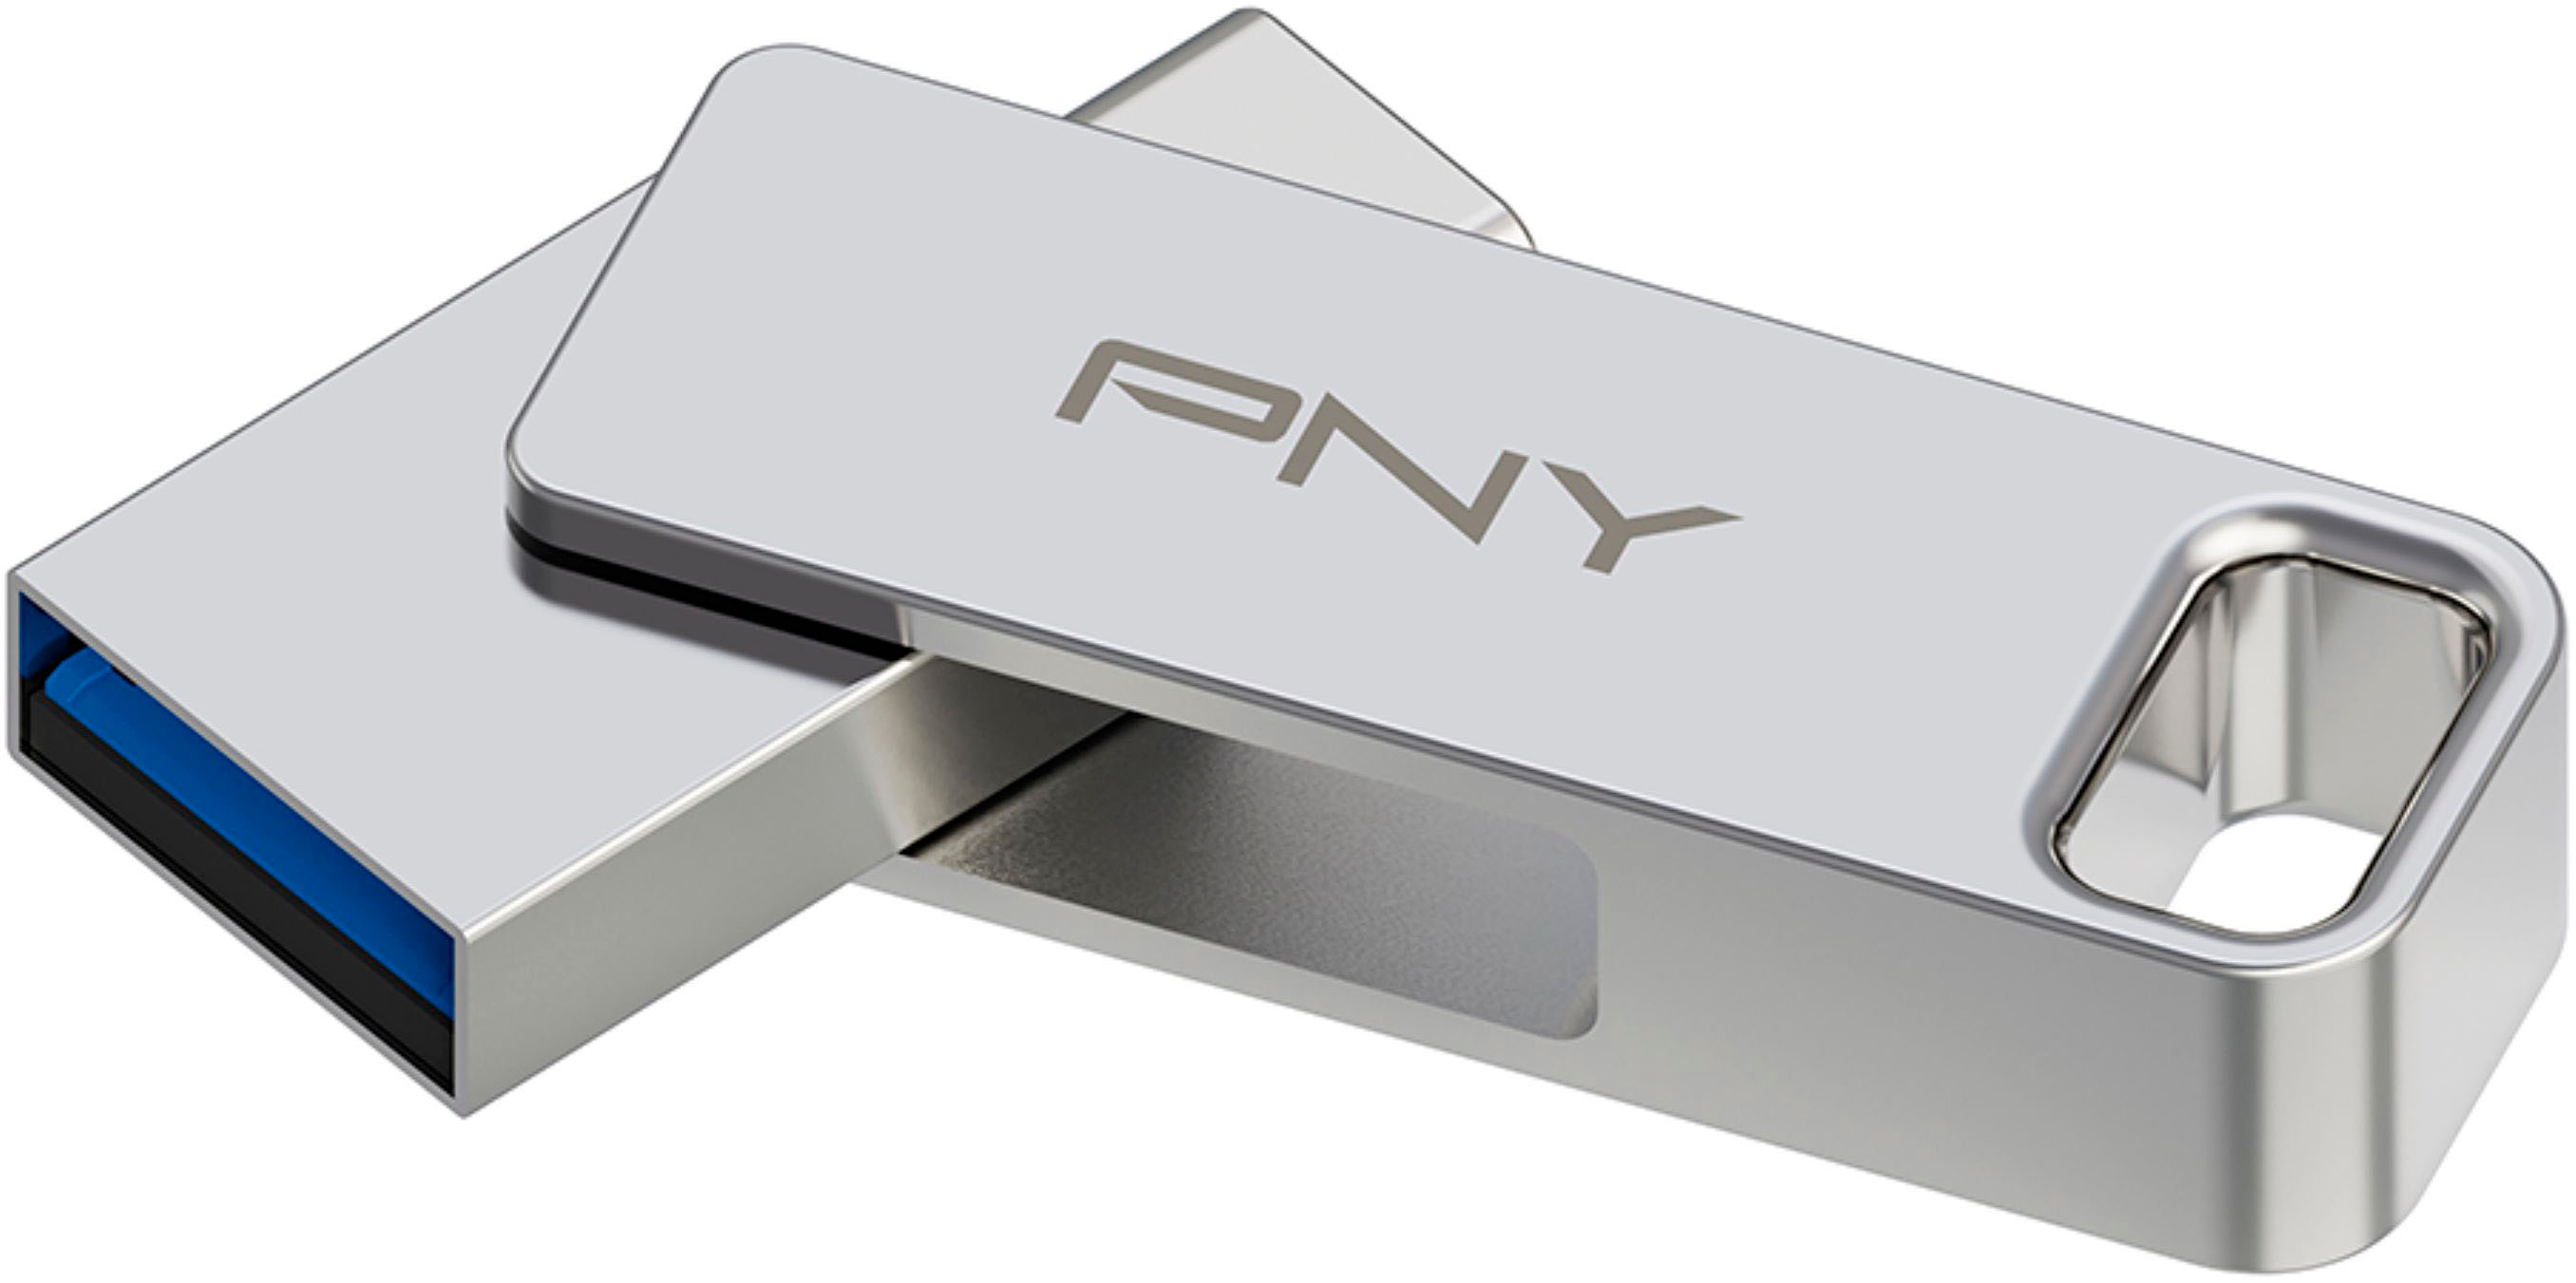 PNY DUO Link 128GB USB 3.2 Gen 1 Type-C OTG Flash Drive Silver  P-FDI128DULINKTYC-GE - Best Buy